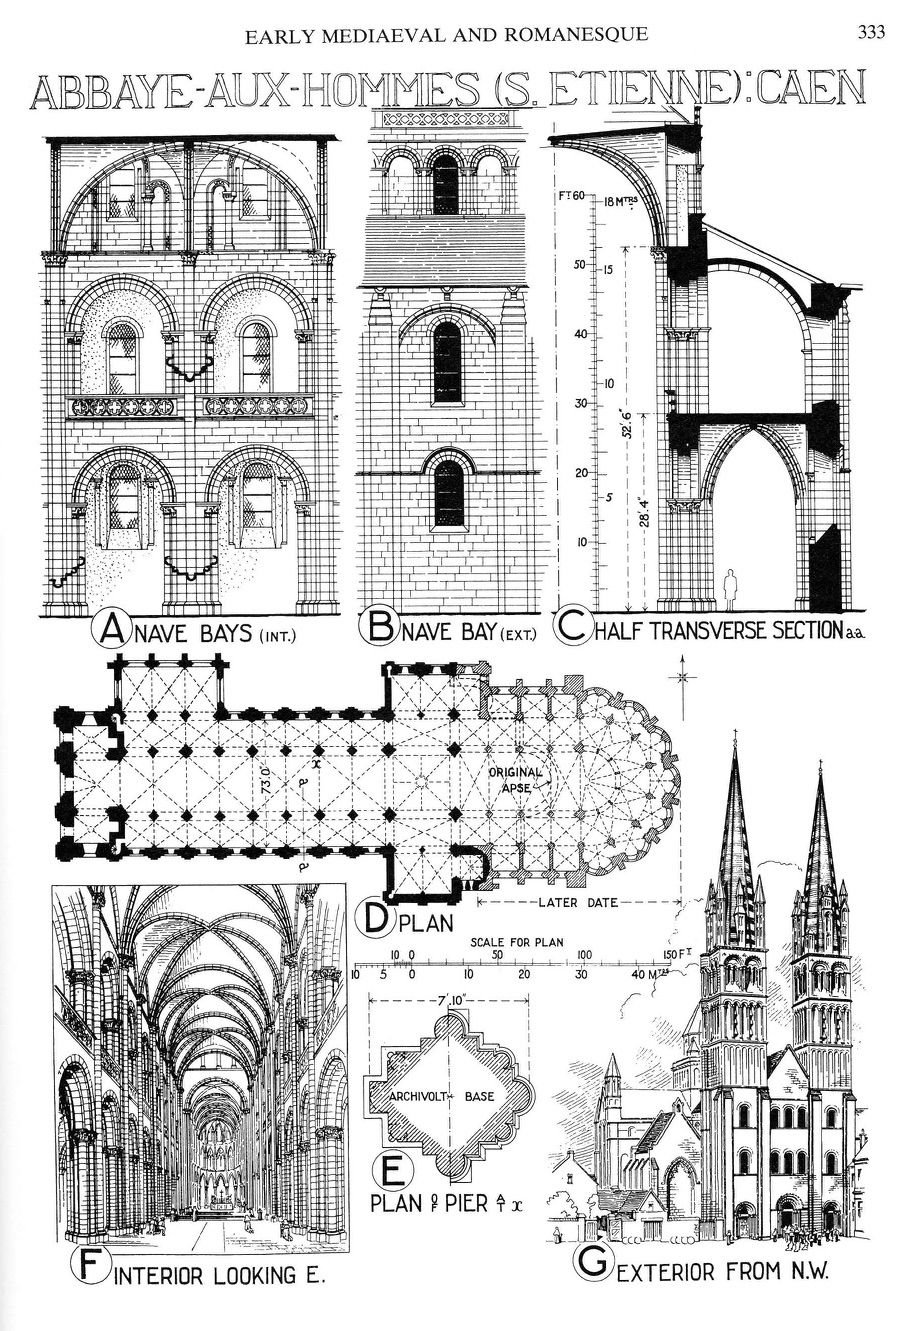 Church Trinita in Cana Plan